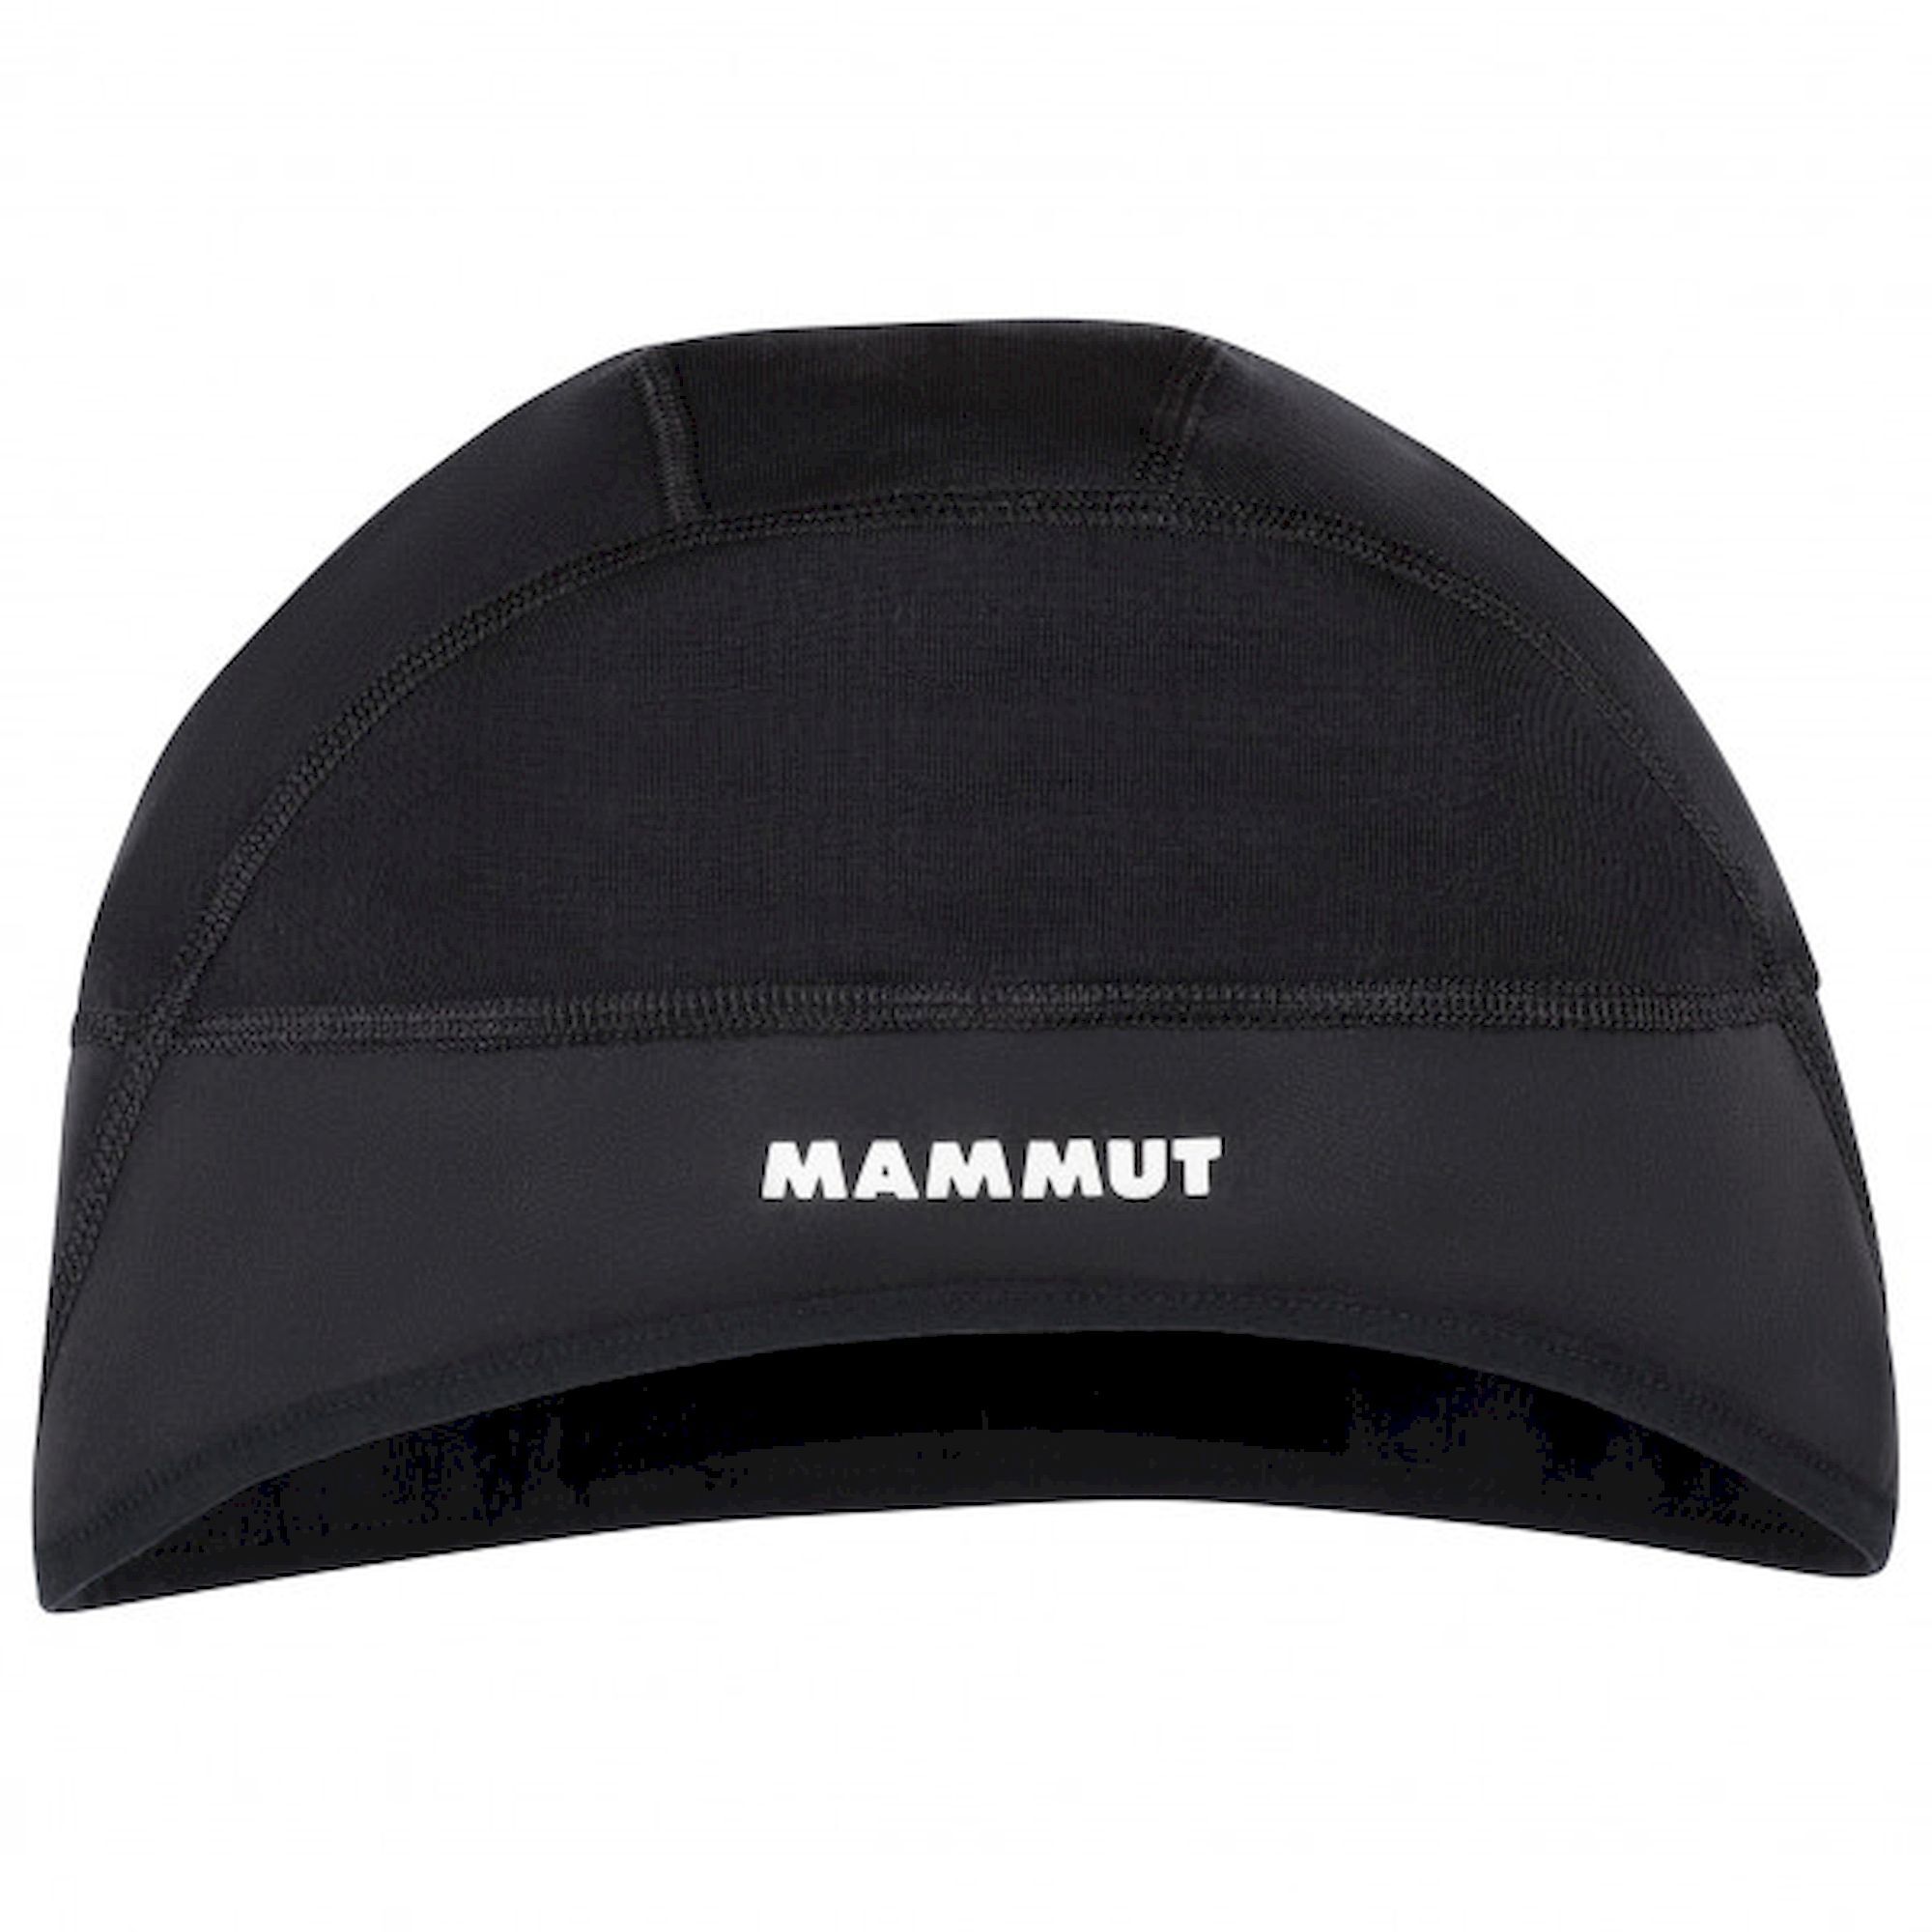 Mammut WS Helm Cap - Mütze - Herren